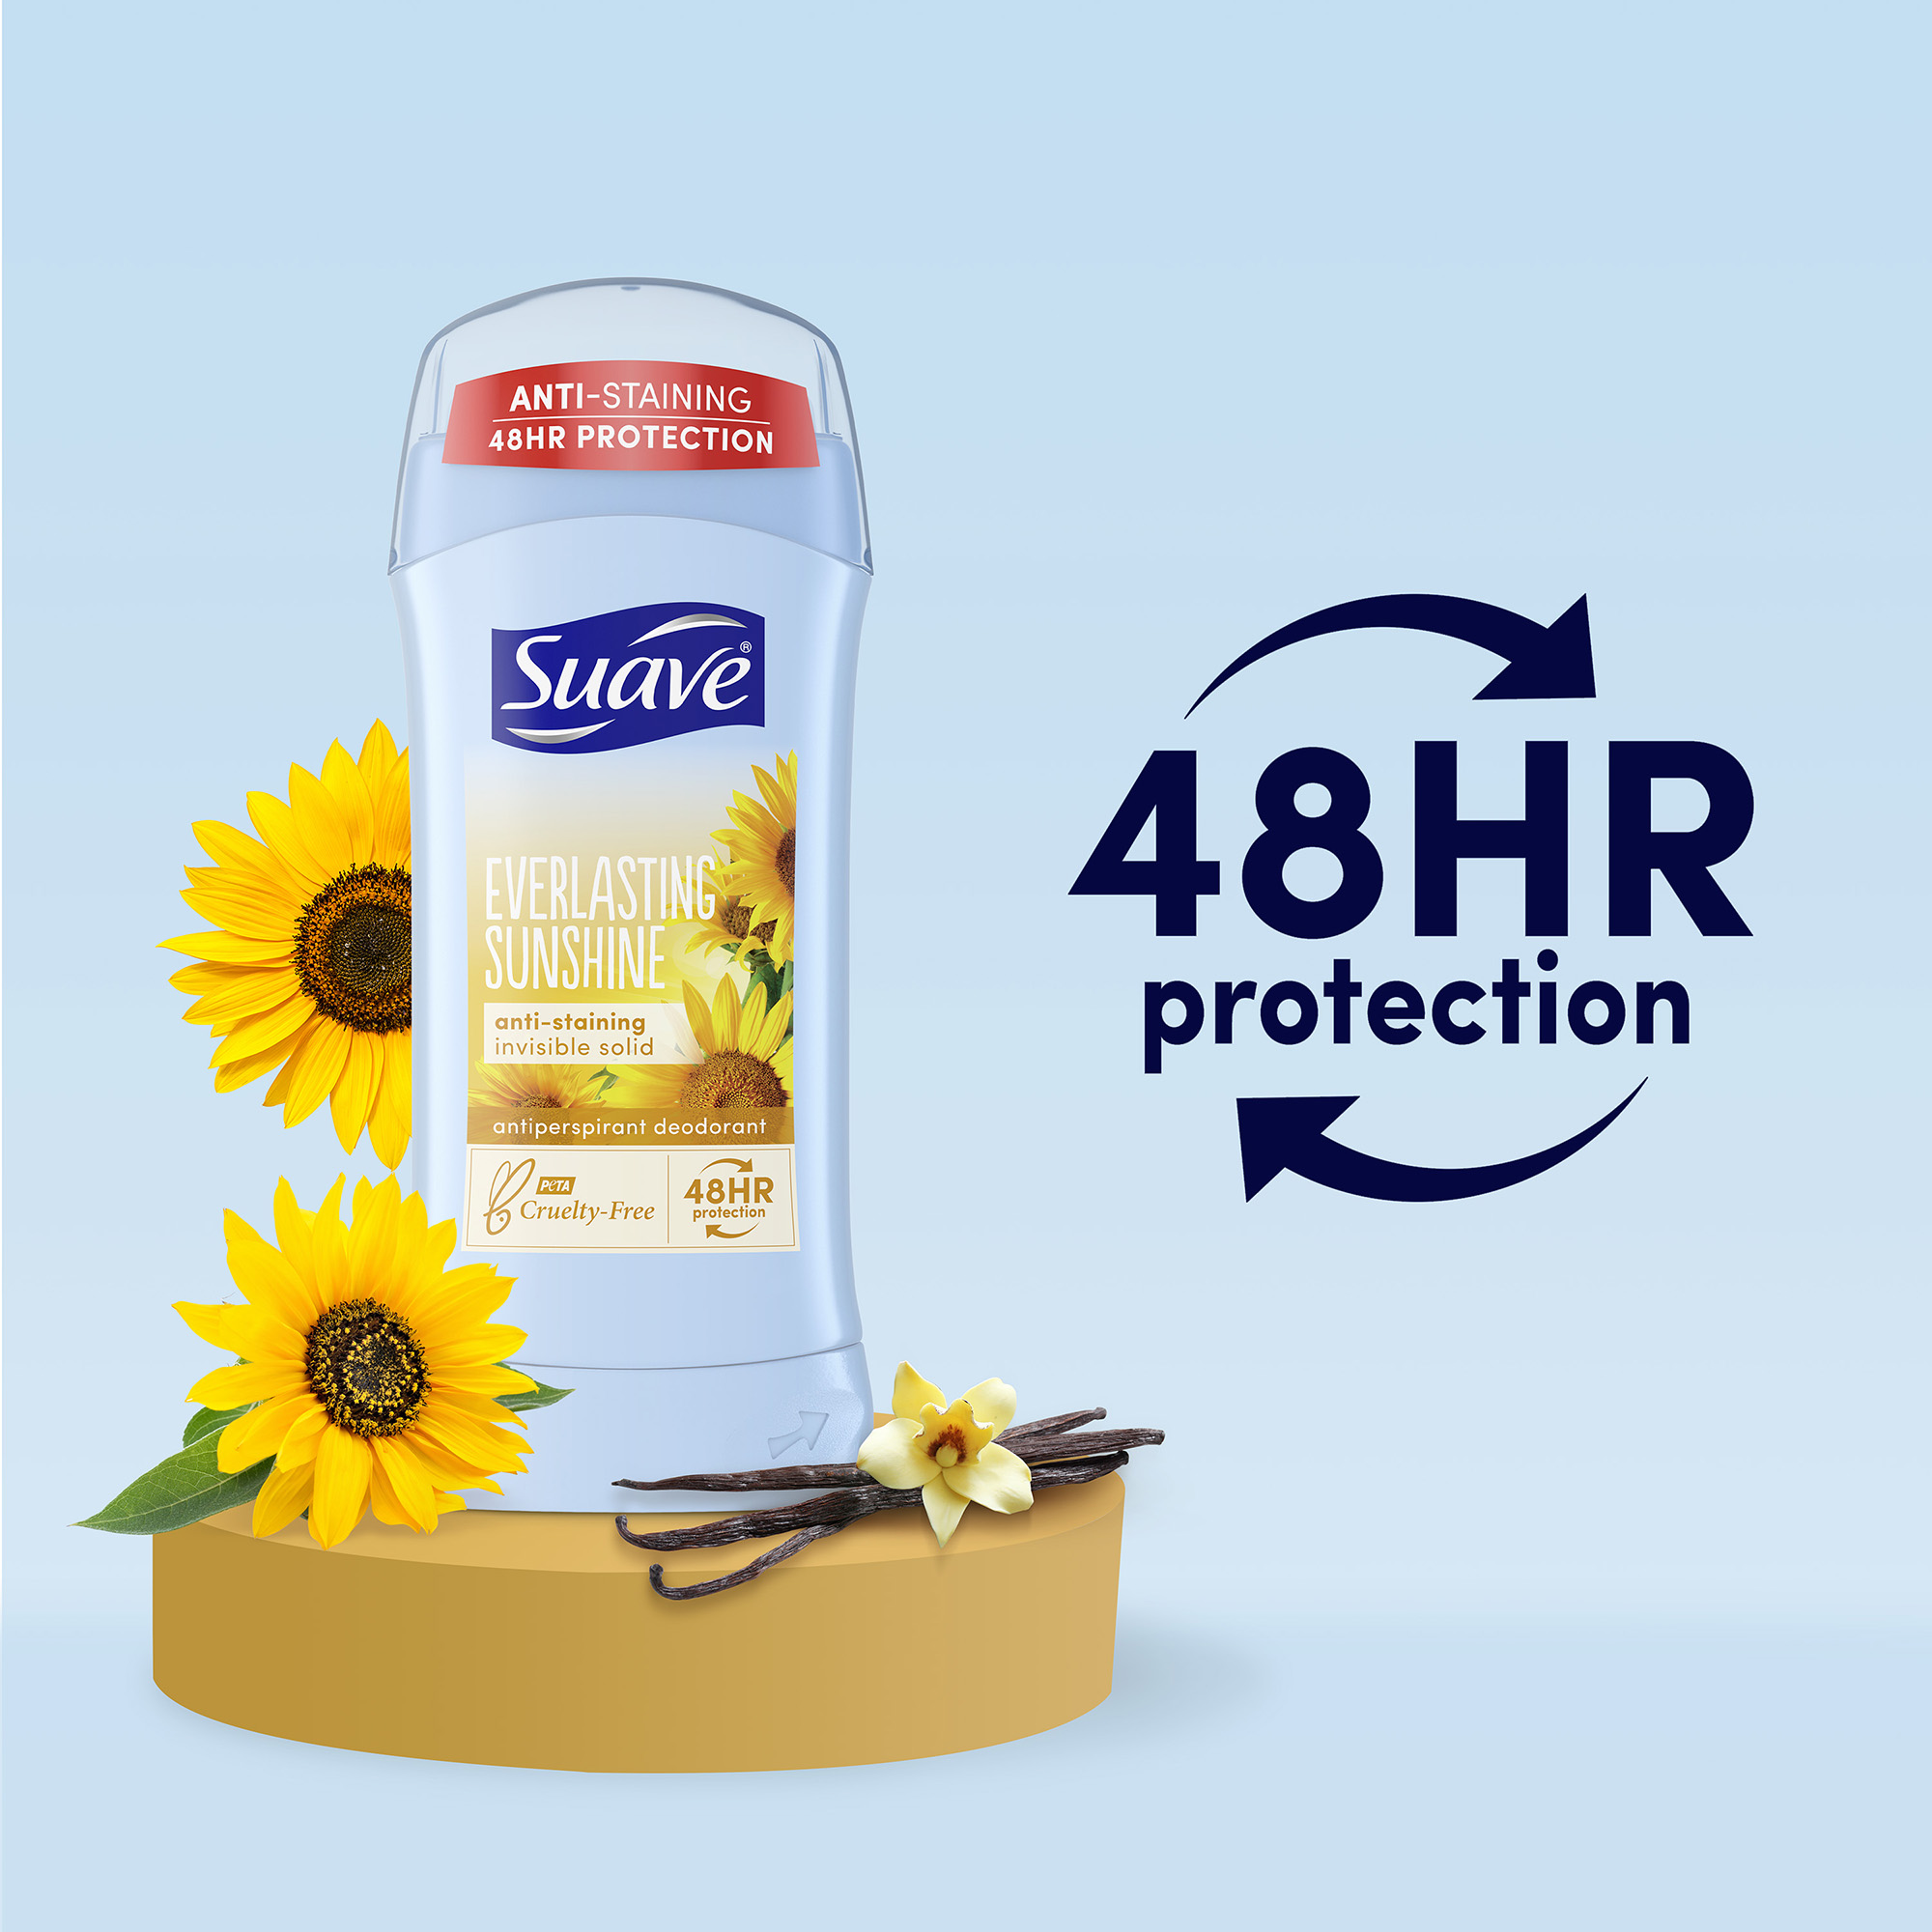 Suave Antiperspirant Deodorant, Everlasting Sunshine, Unisex, 2.6 oz - image 3 of 12